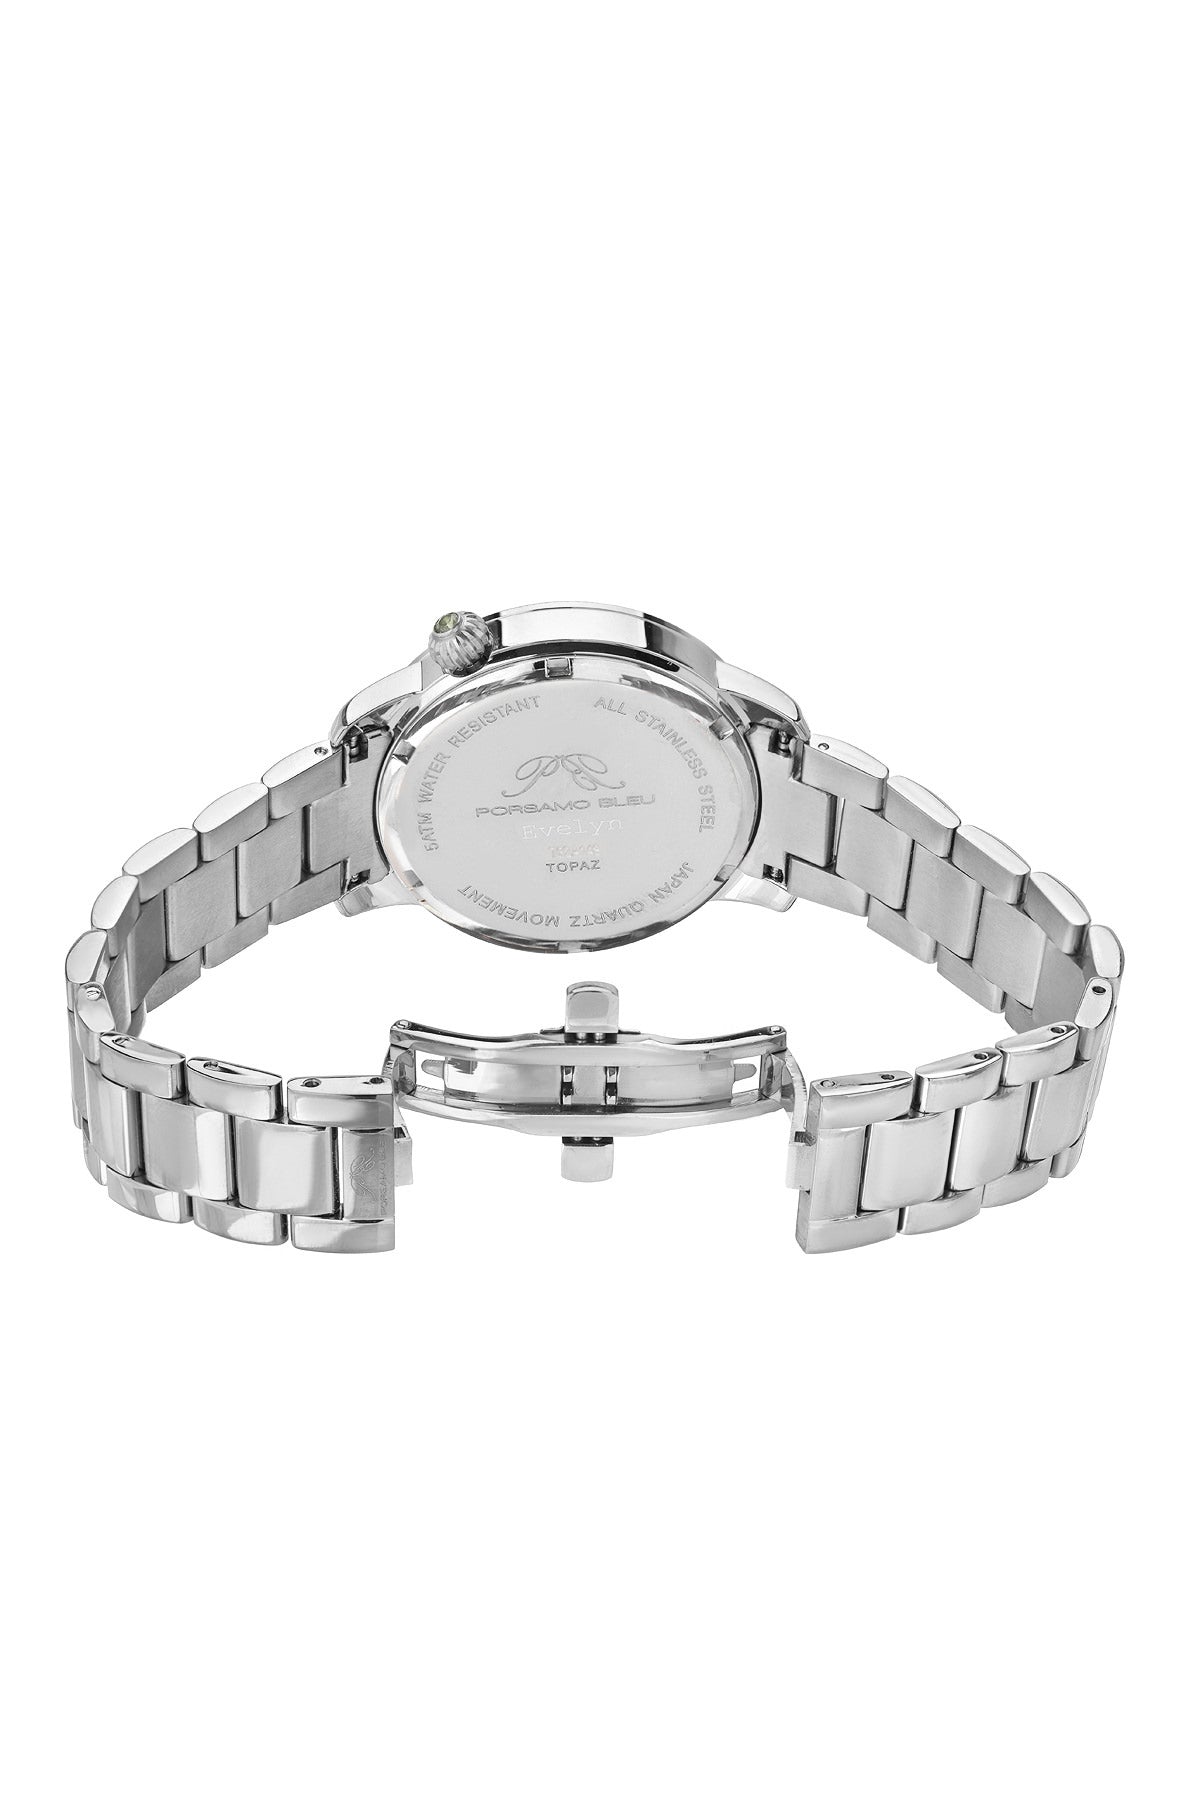 Porsamo Bleu Evelyn Luxury Topaz Women's Stainless Steel Watch, Silver, Black 762AEVS